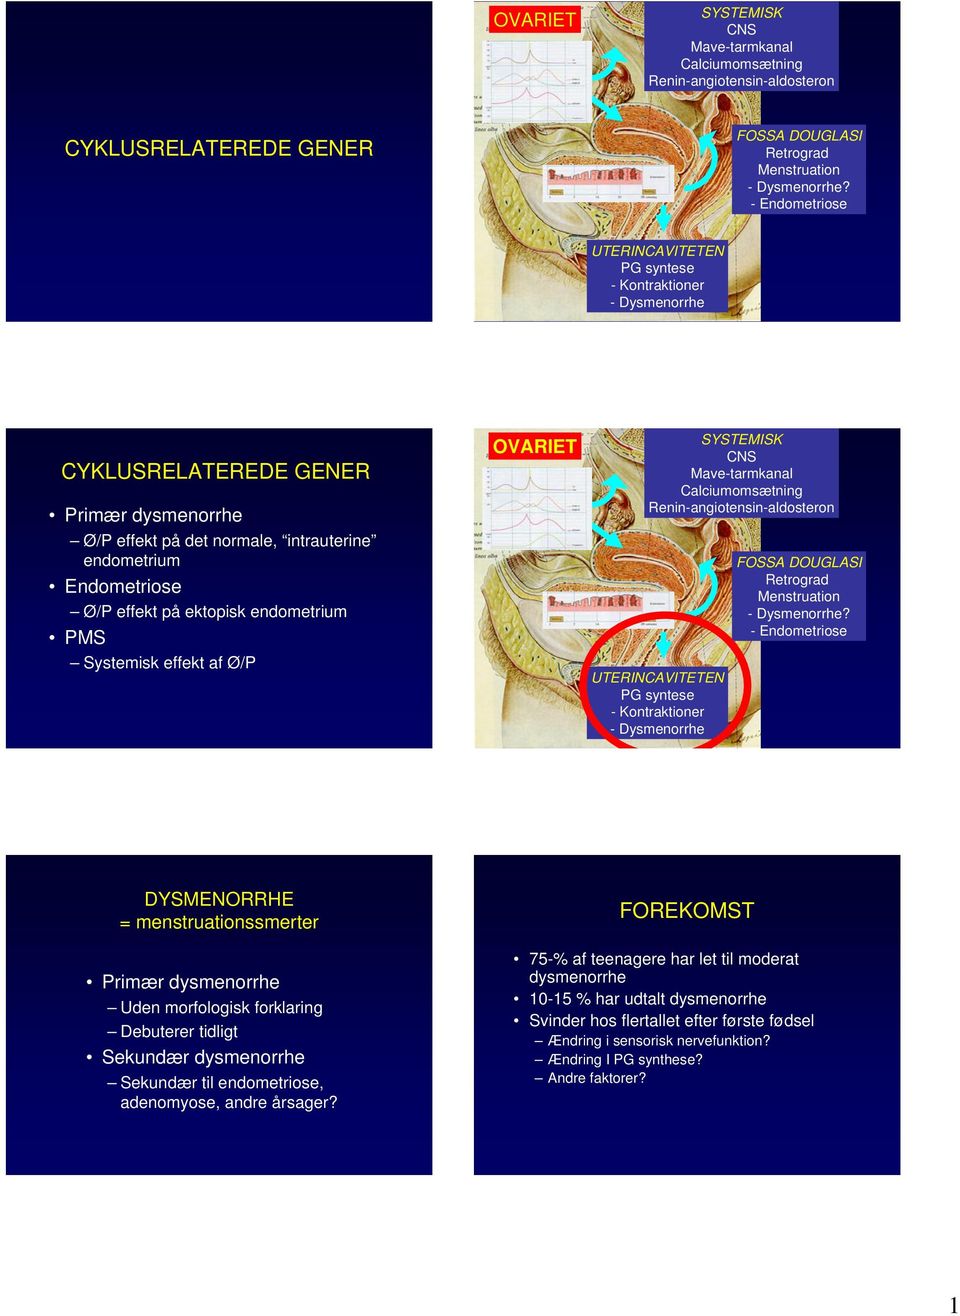 ektopisk endometrium PMS Systemisk effekt af Ø/P OVARIET SYSTEMISK CNS Mave-tarmkanal Calciumomsætning Renin-angiotensin-aldosteron UTERINCAVITETEN PG syntese - Kontraktioner - Dysmenorrhe FOSSA